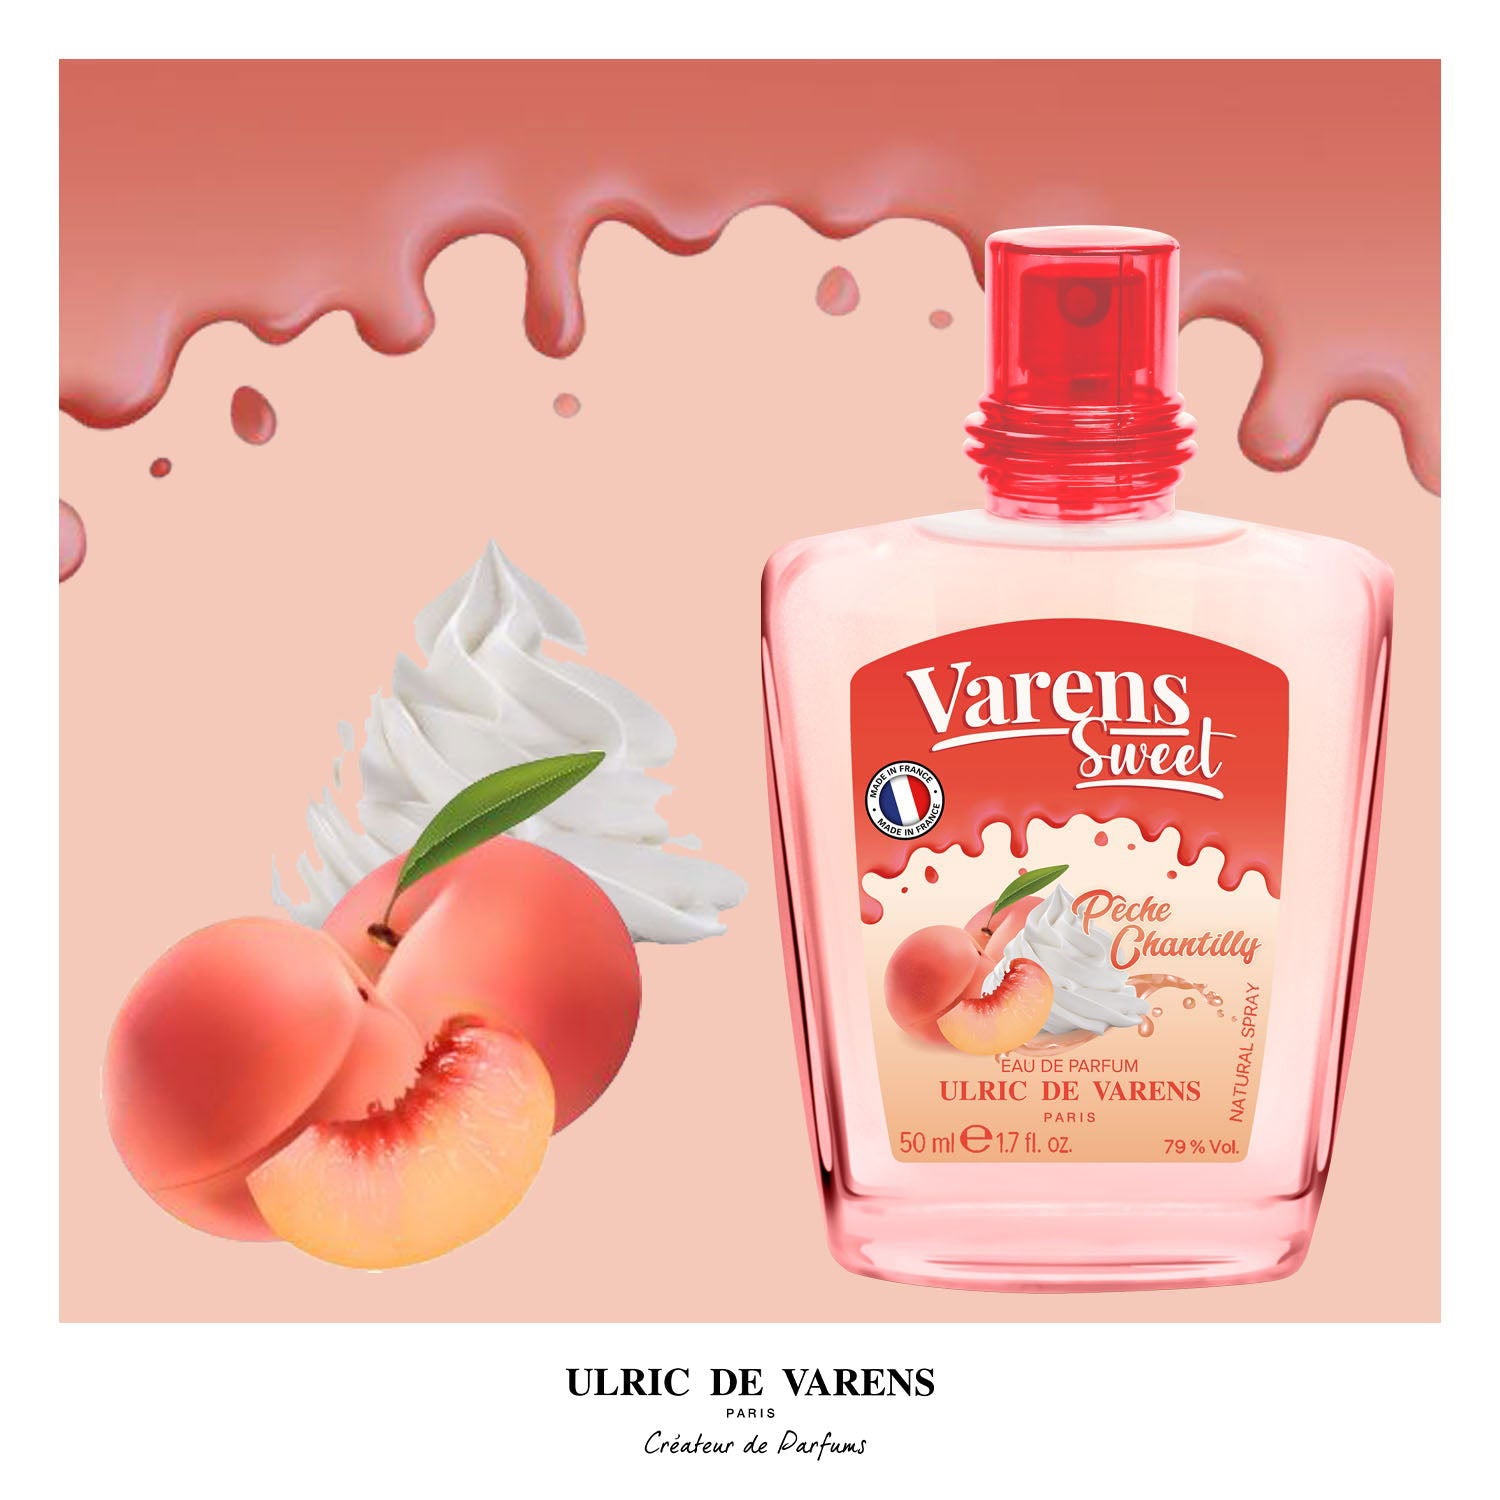 Varens Sweet Pêche Chantilly - Ulric de Varens -  - #tag1# - #tag2# - #tag3# - #tag4#